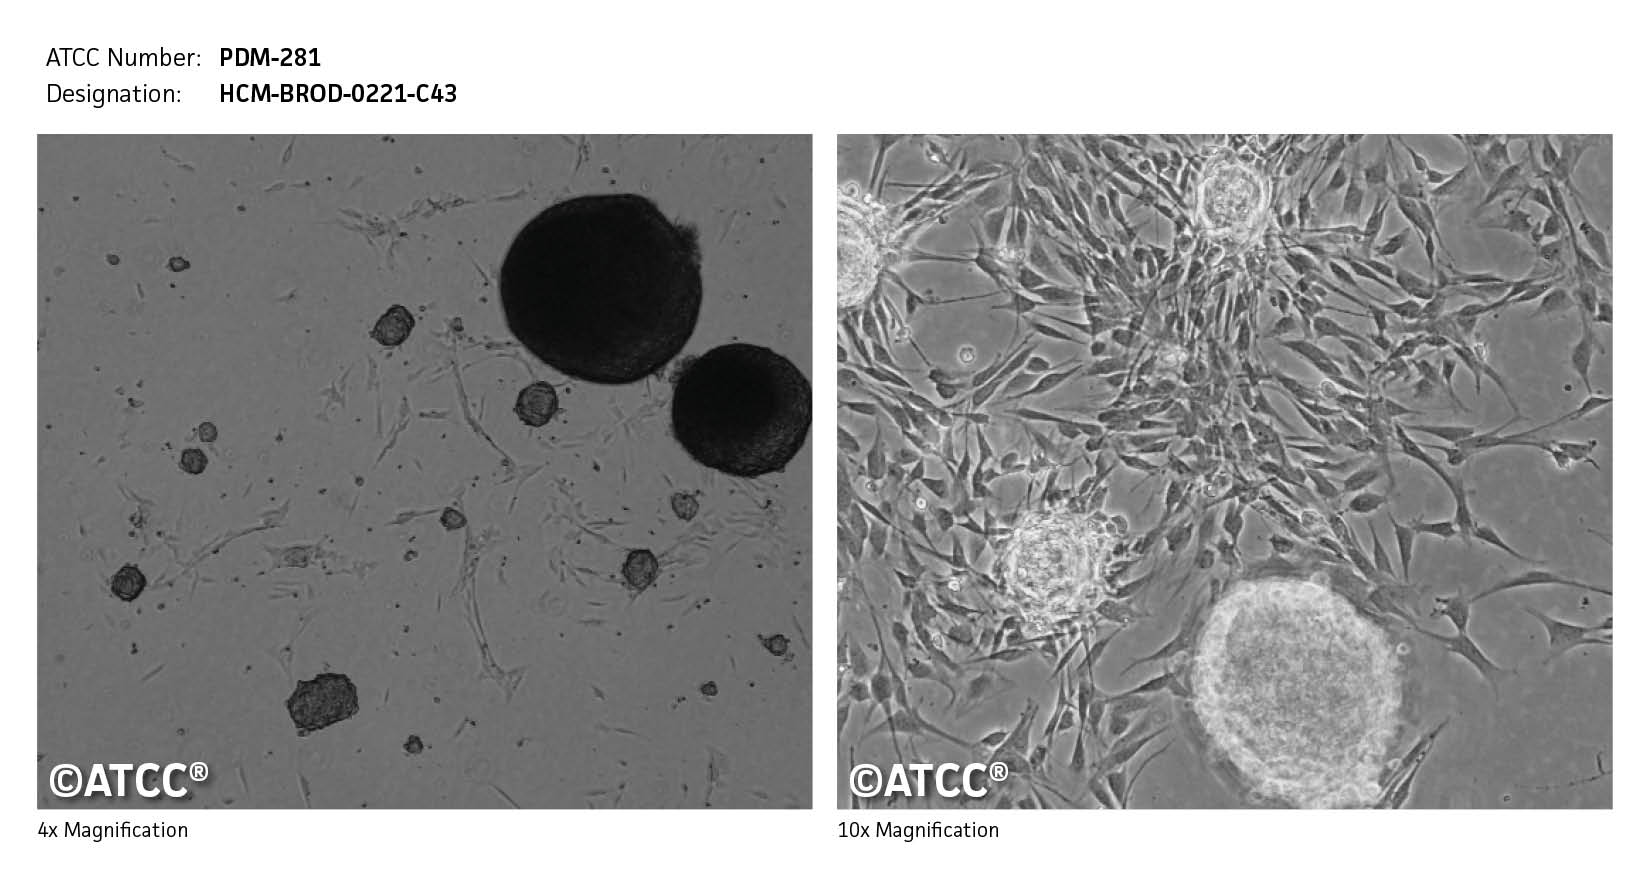 ATCC PDM-281 Cell Micrograph